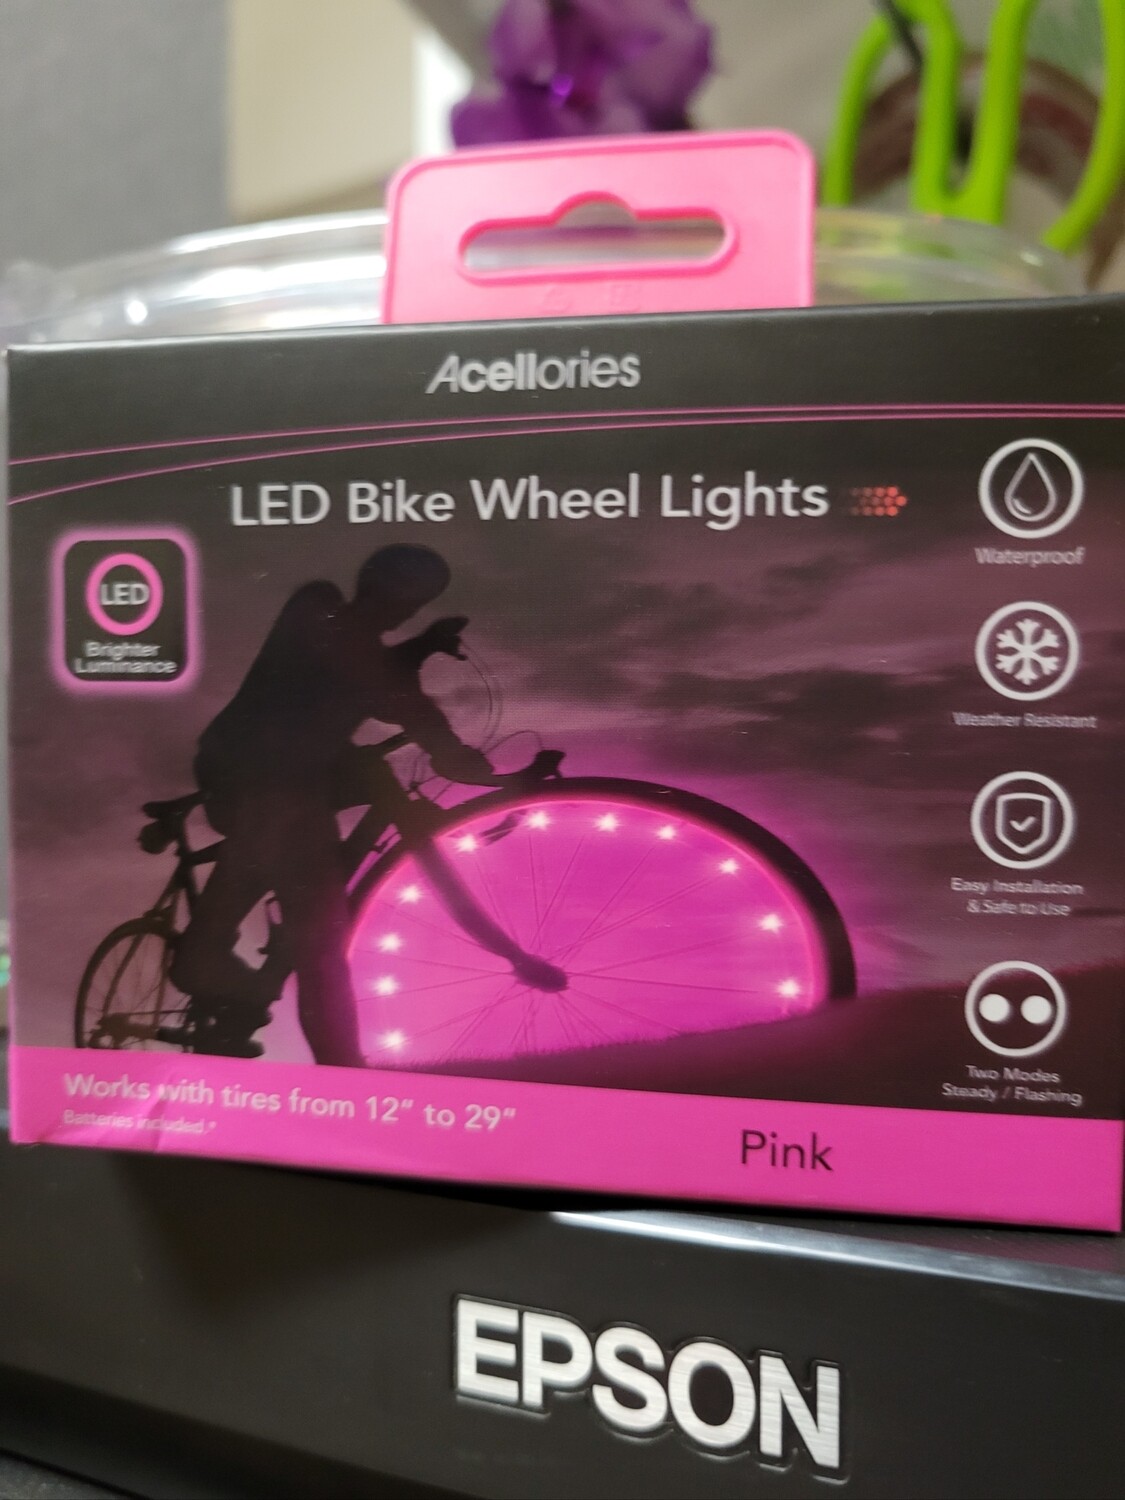 LED Bike Wheel Lights Acellories Pink